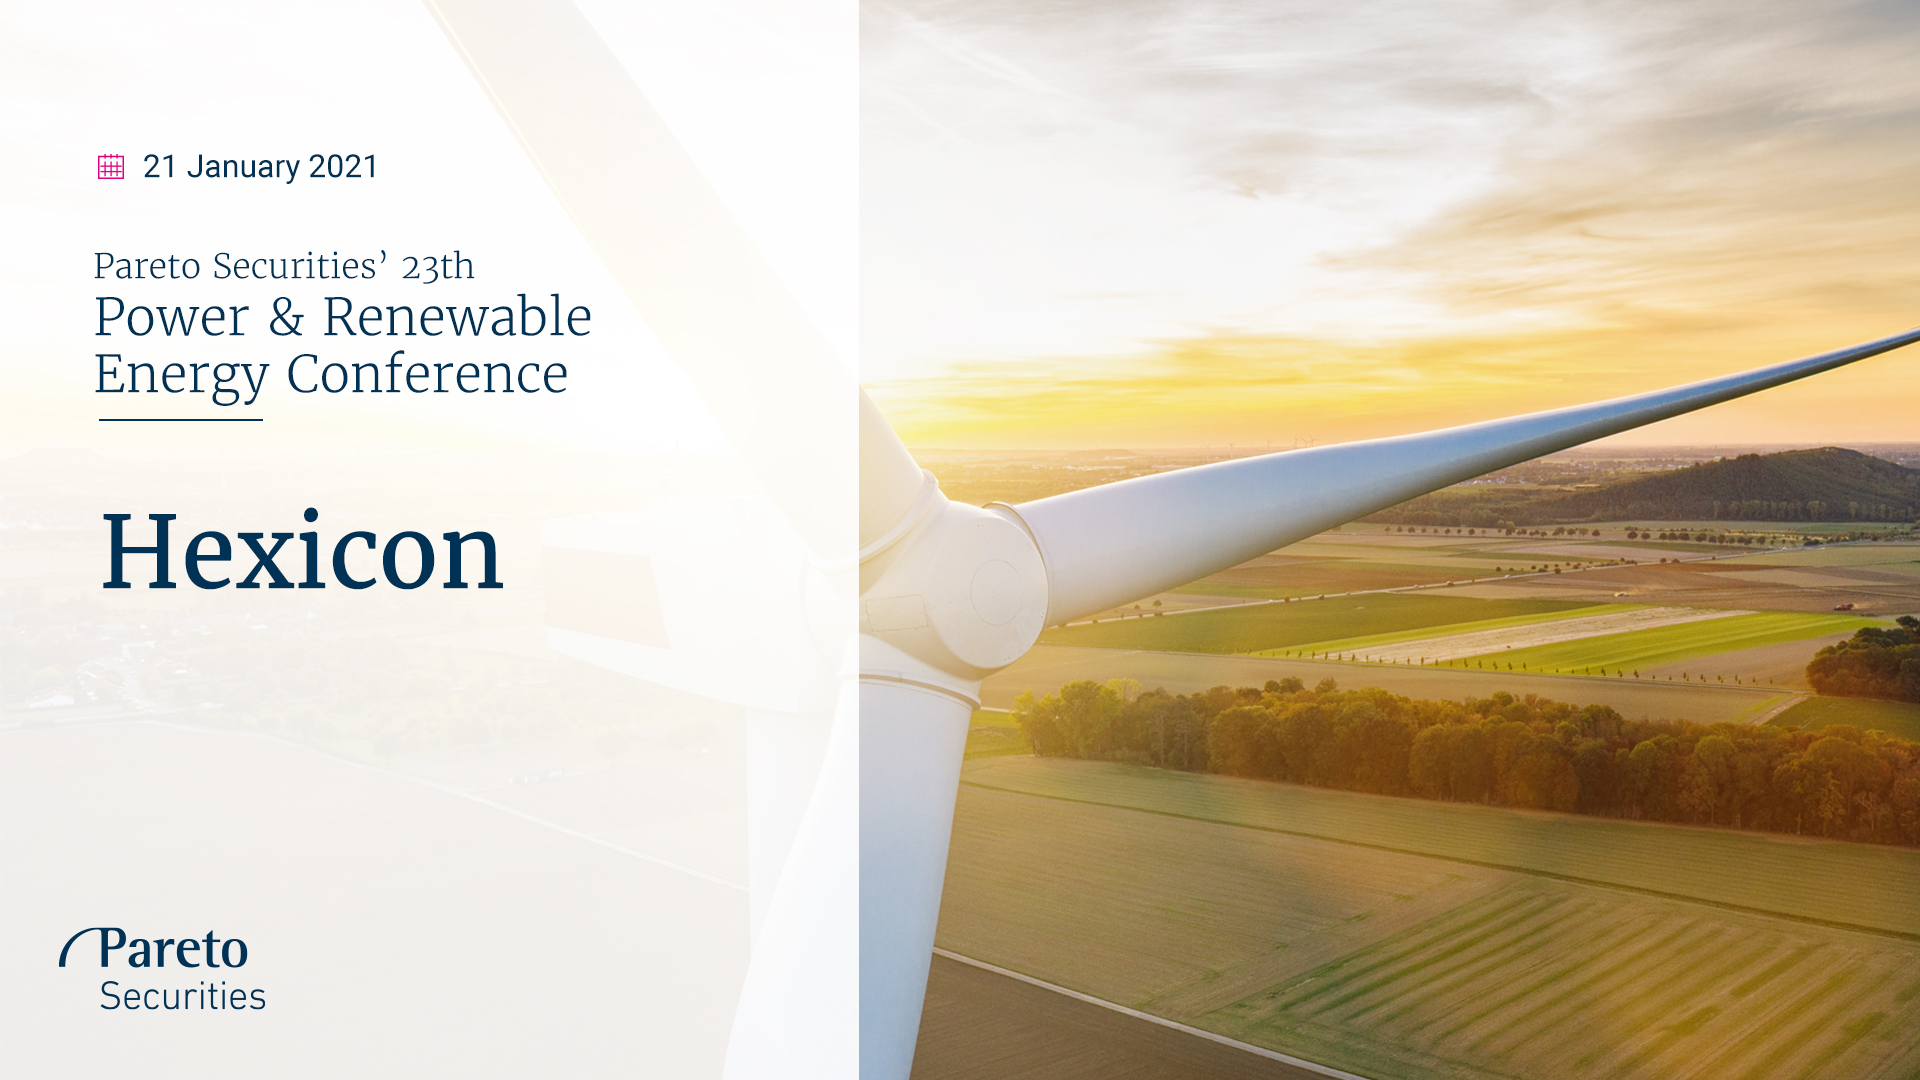 Hexicon / Pareto Securities’ Power & Renewable Energy Conference